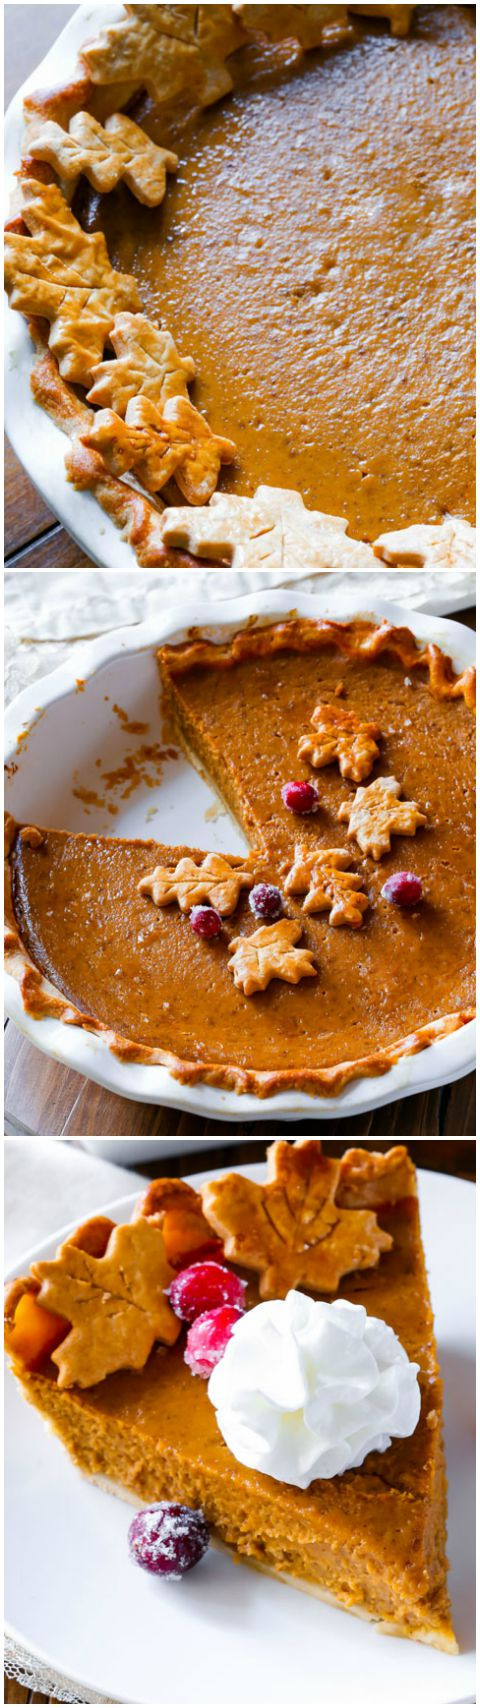 Fall Pie Recipes
 The Great Pumpkin Pie Recipe Sallys Baking Addiction